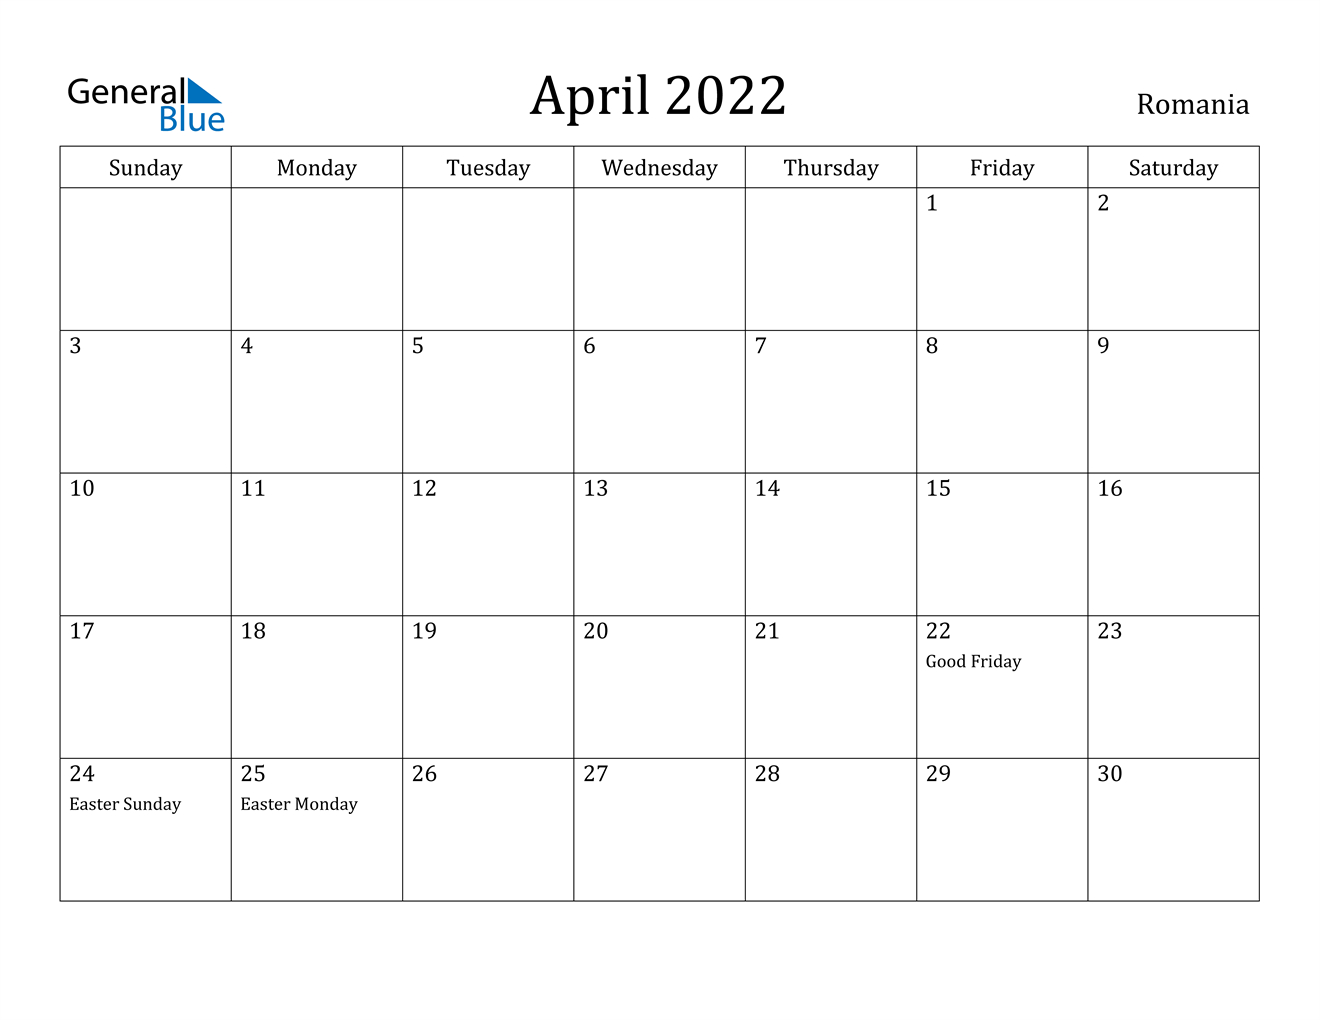 Collect April 2022 Calendar With Us Holidays